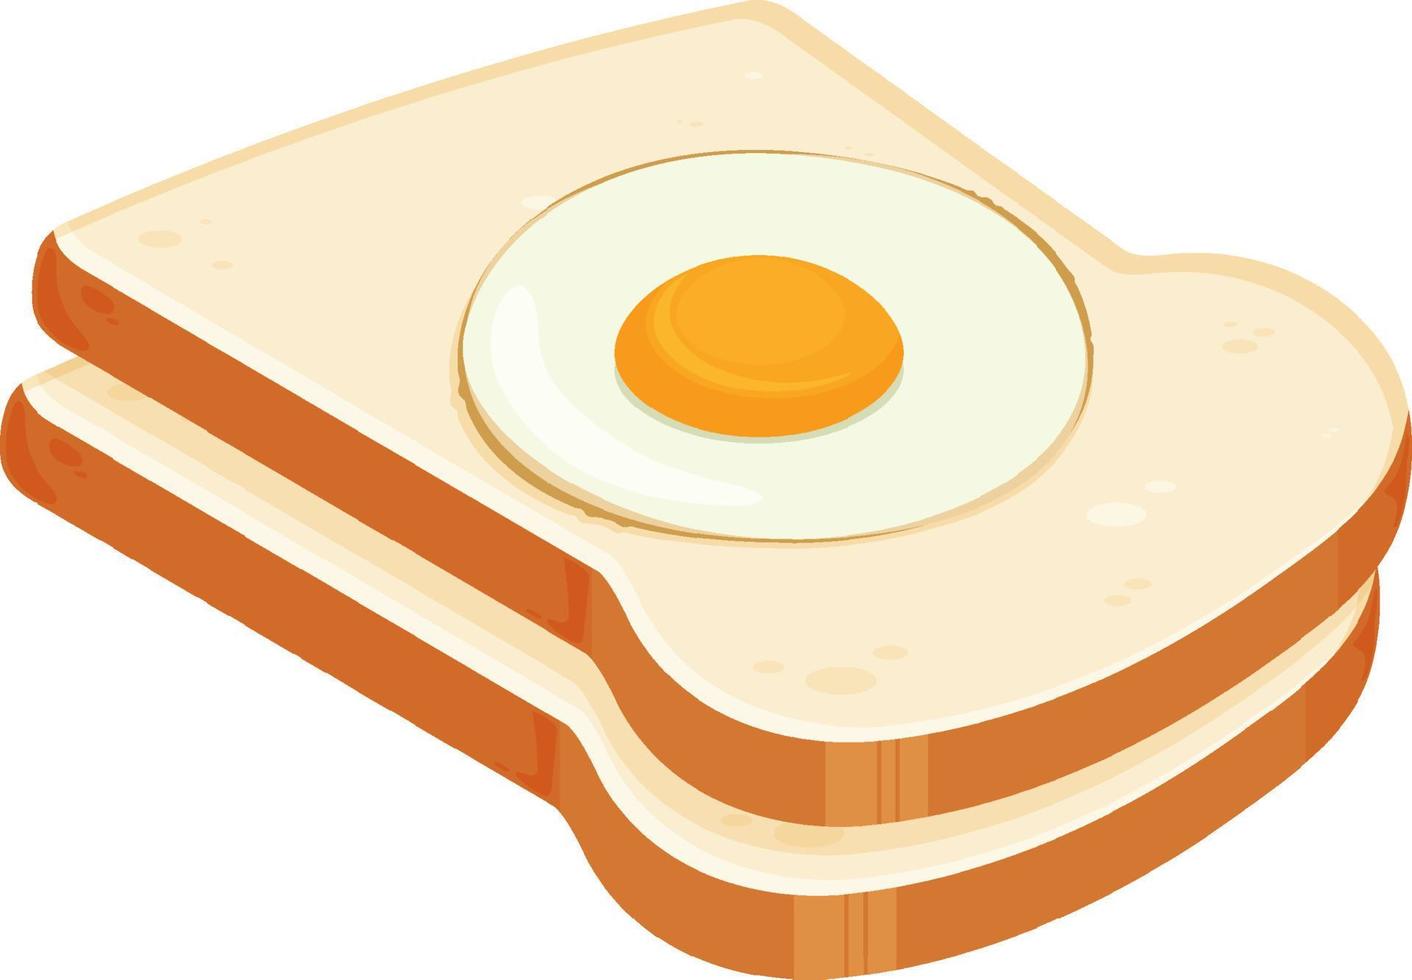 Sandwich bread with egg in cartoon style vector